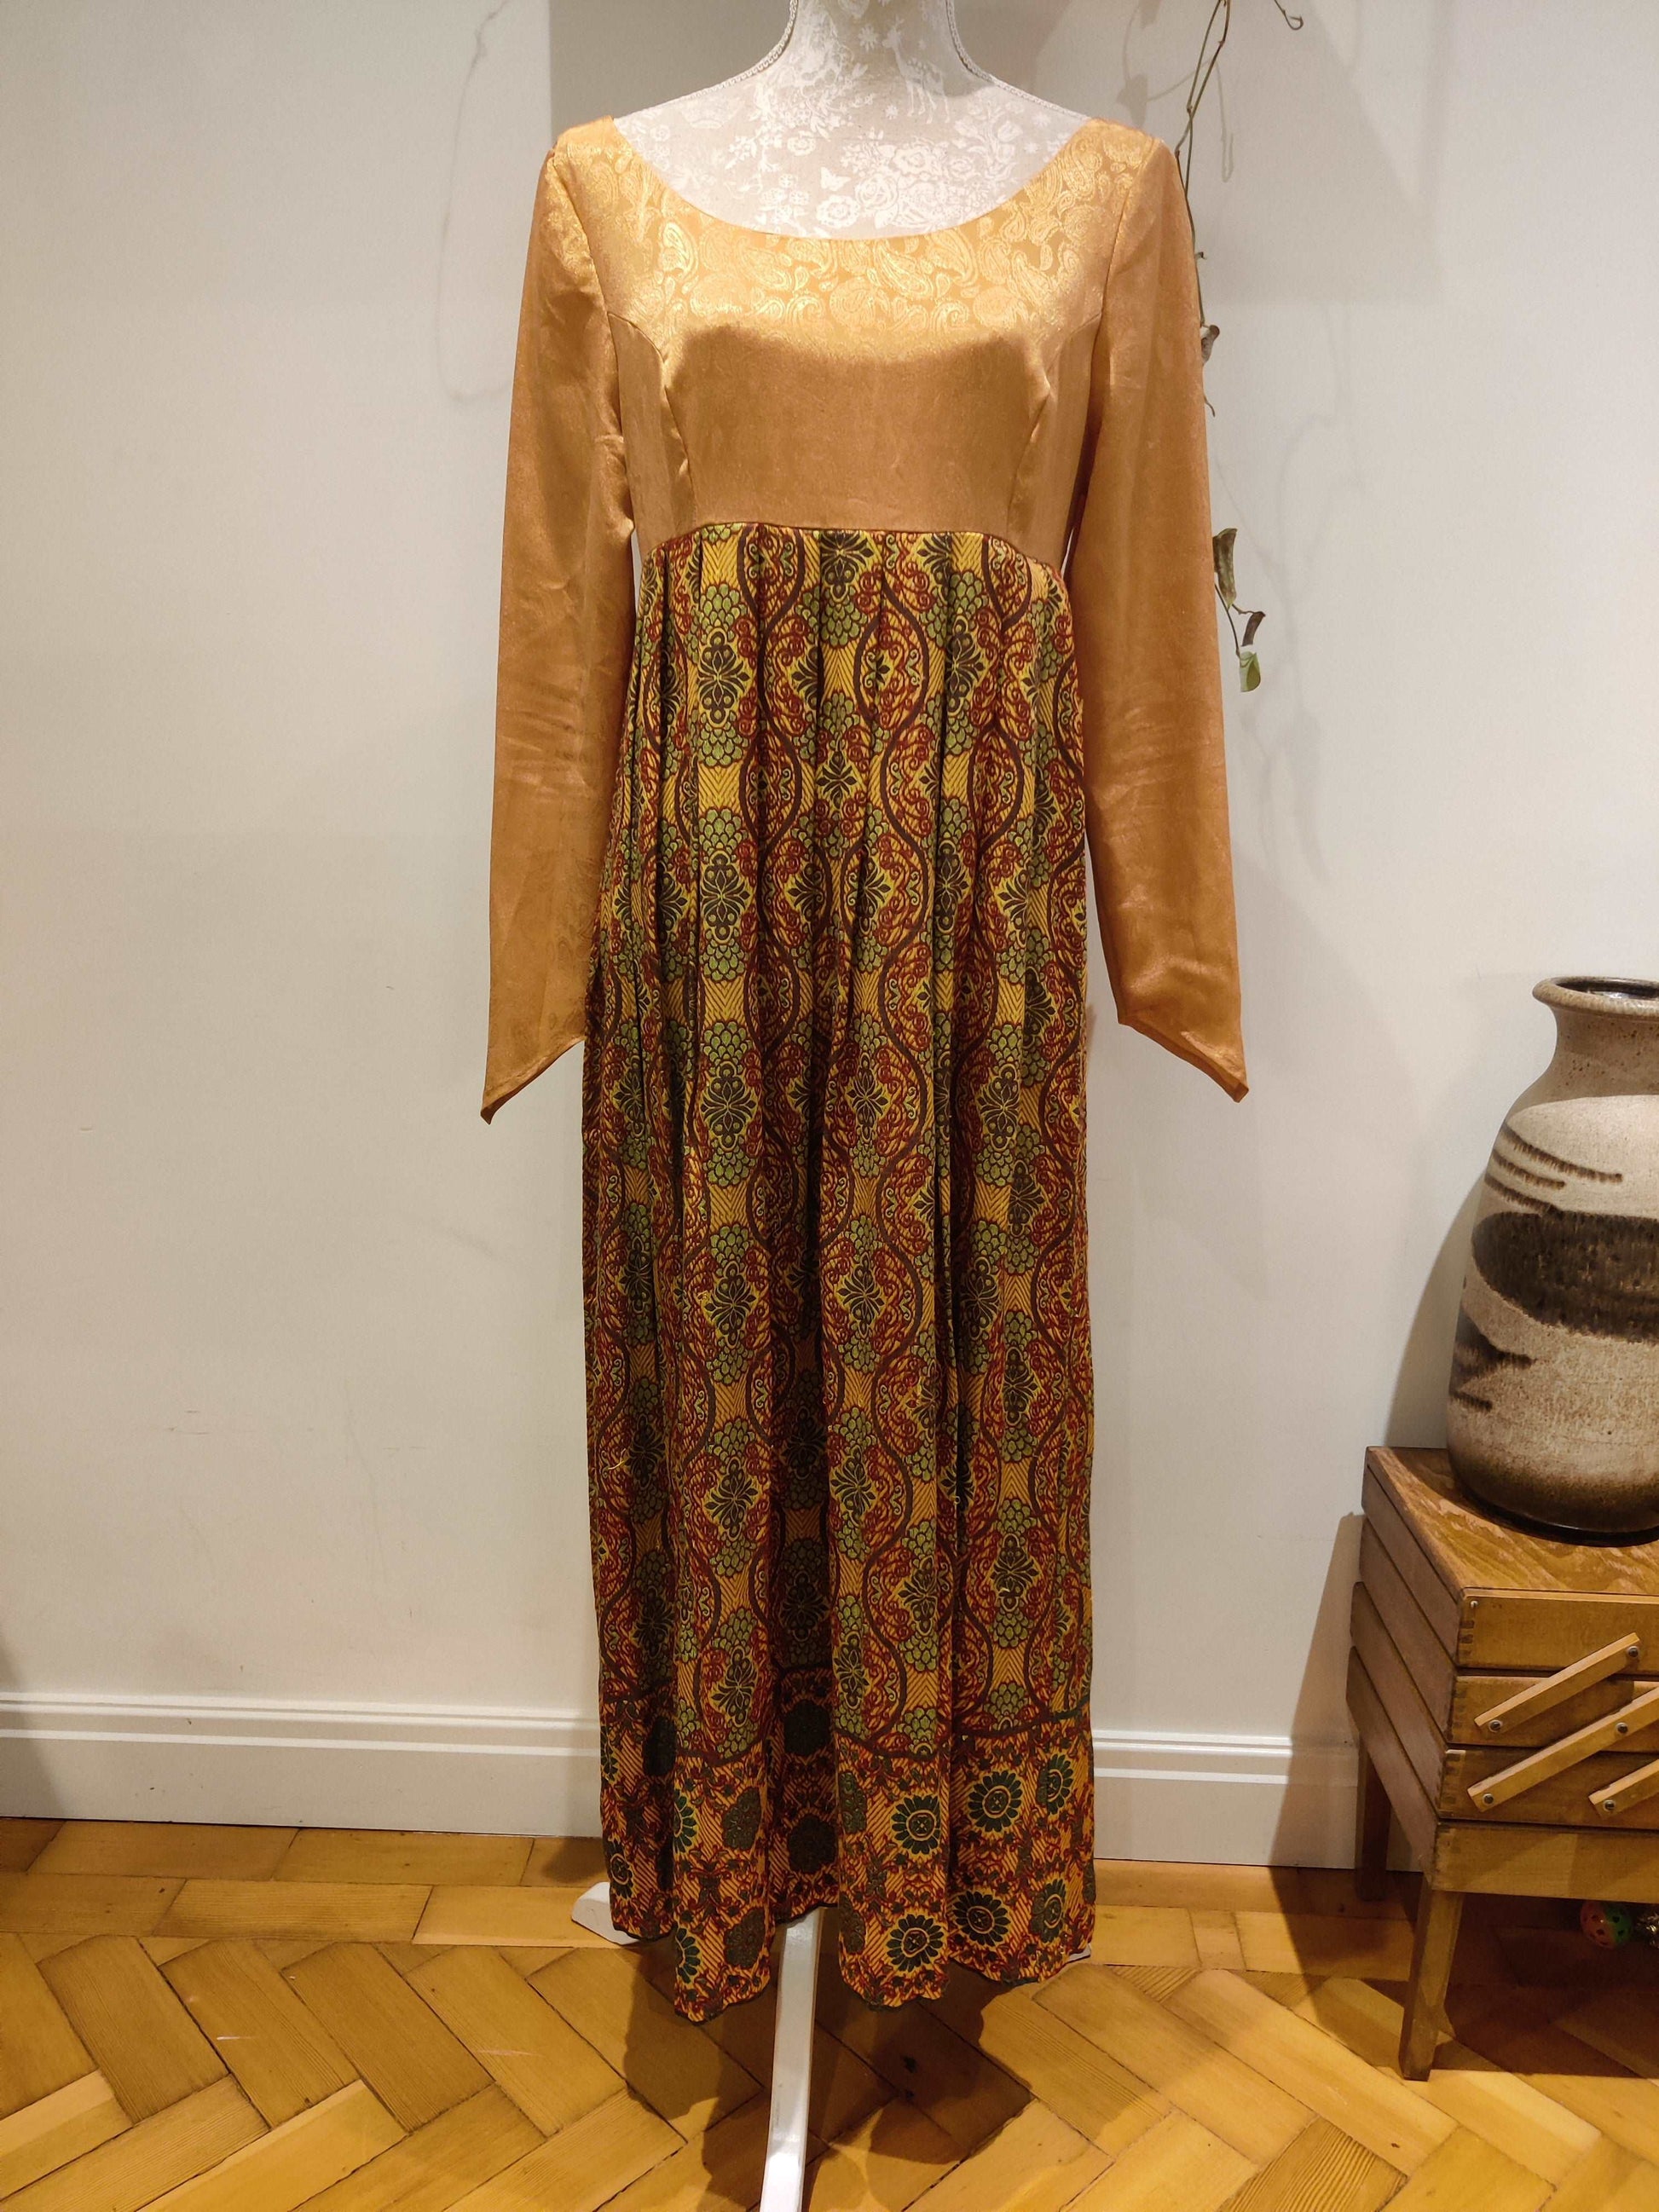 Stunning Indian silk maxi dress.